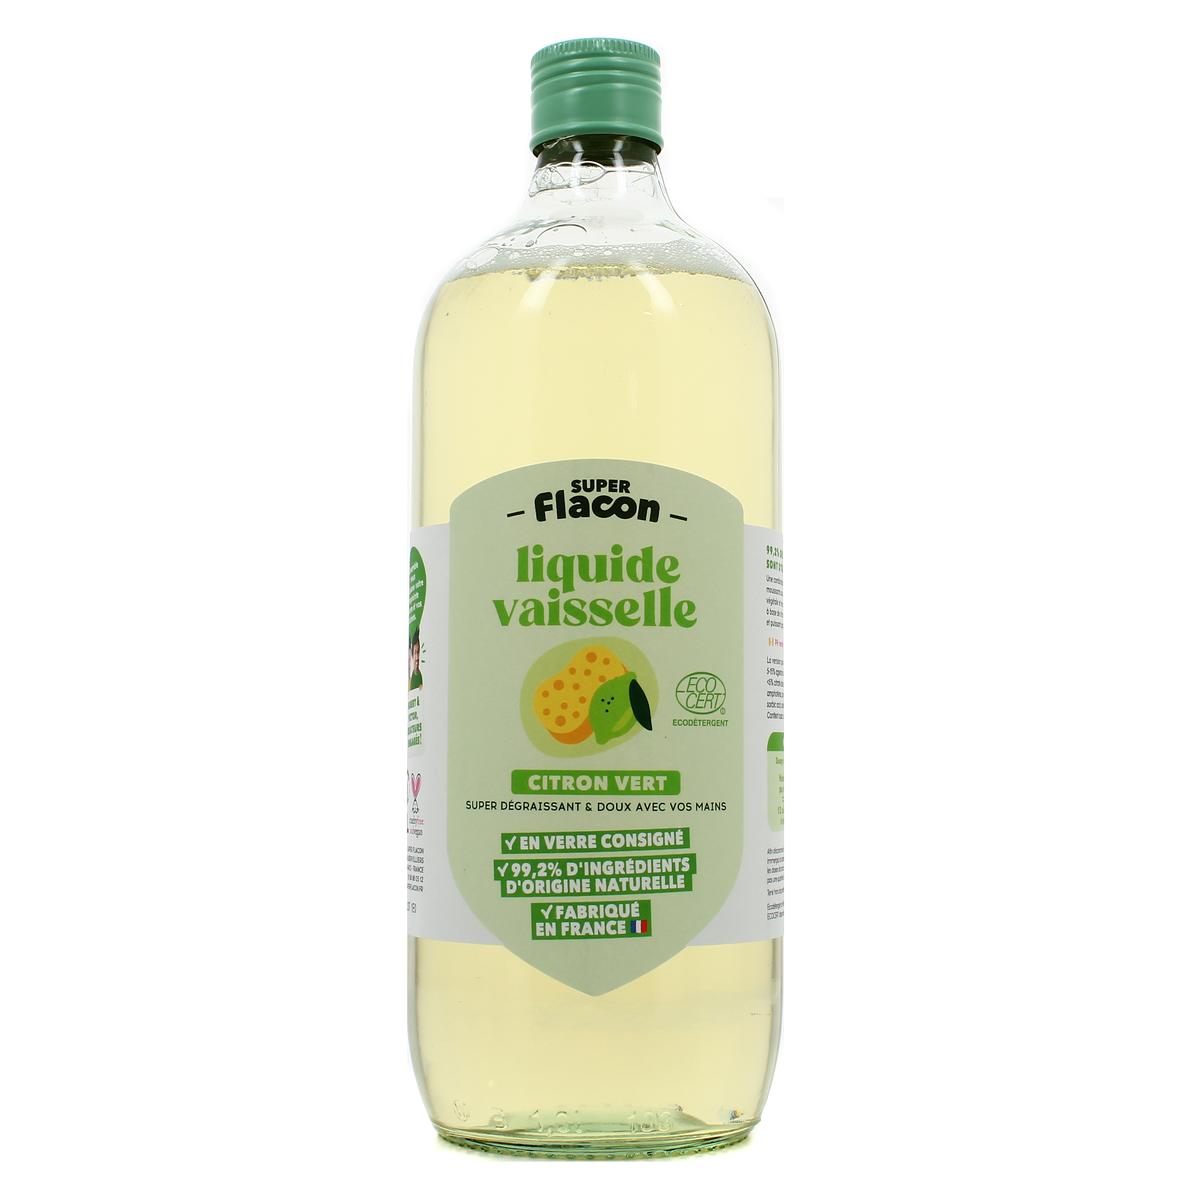 Liquide vaisselle citron vert